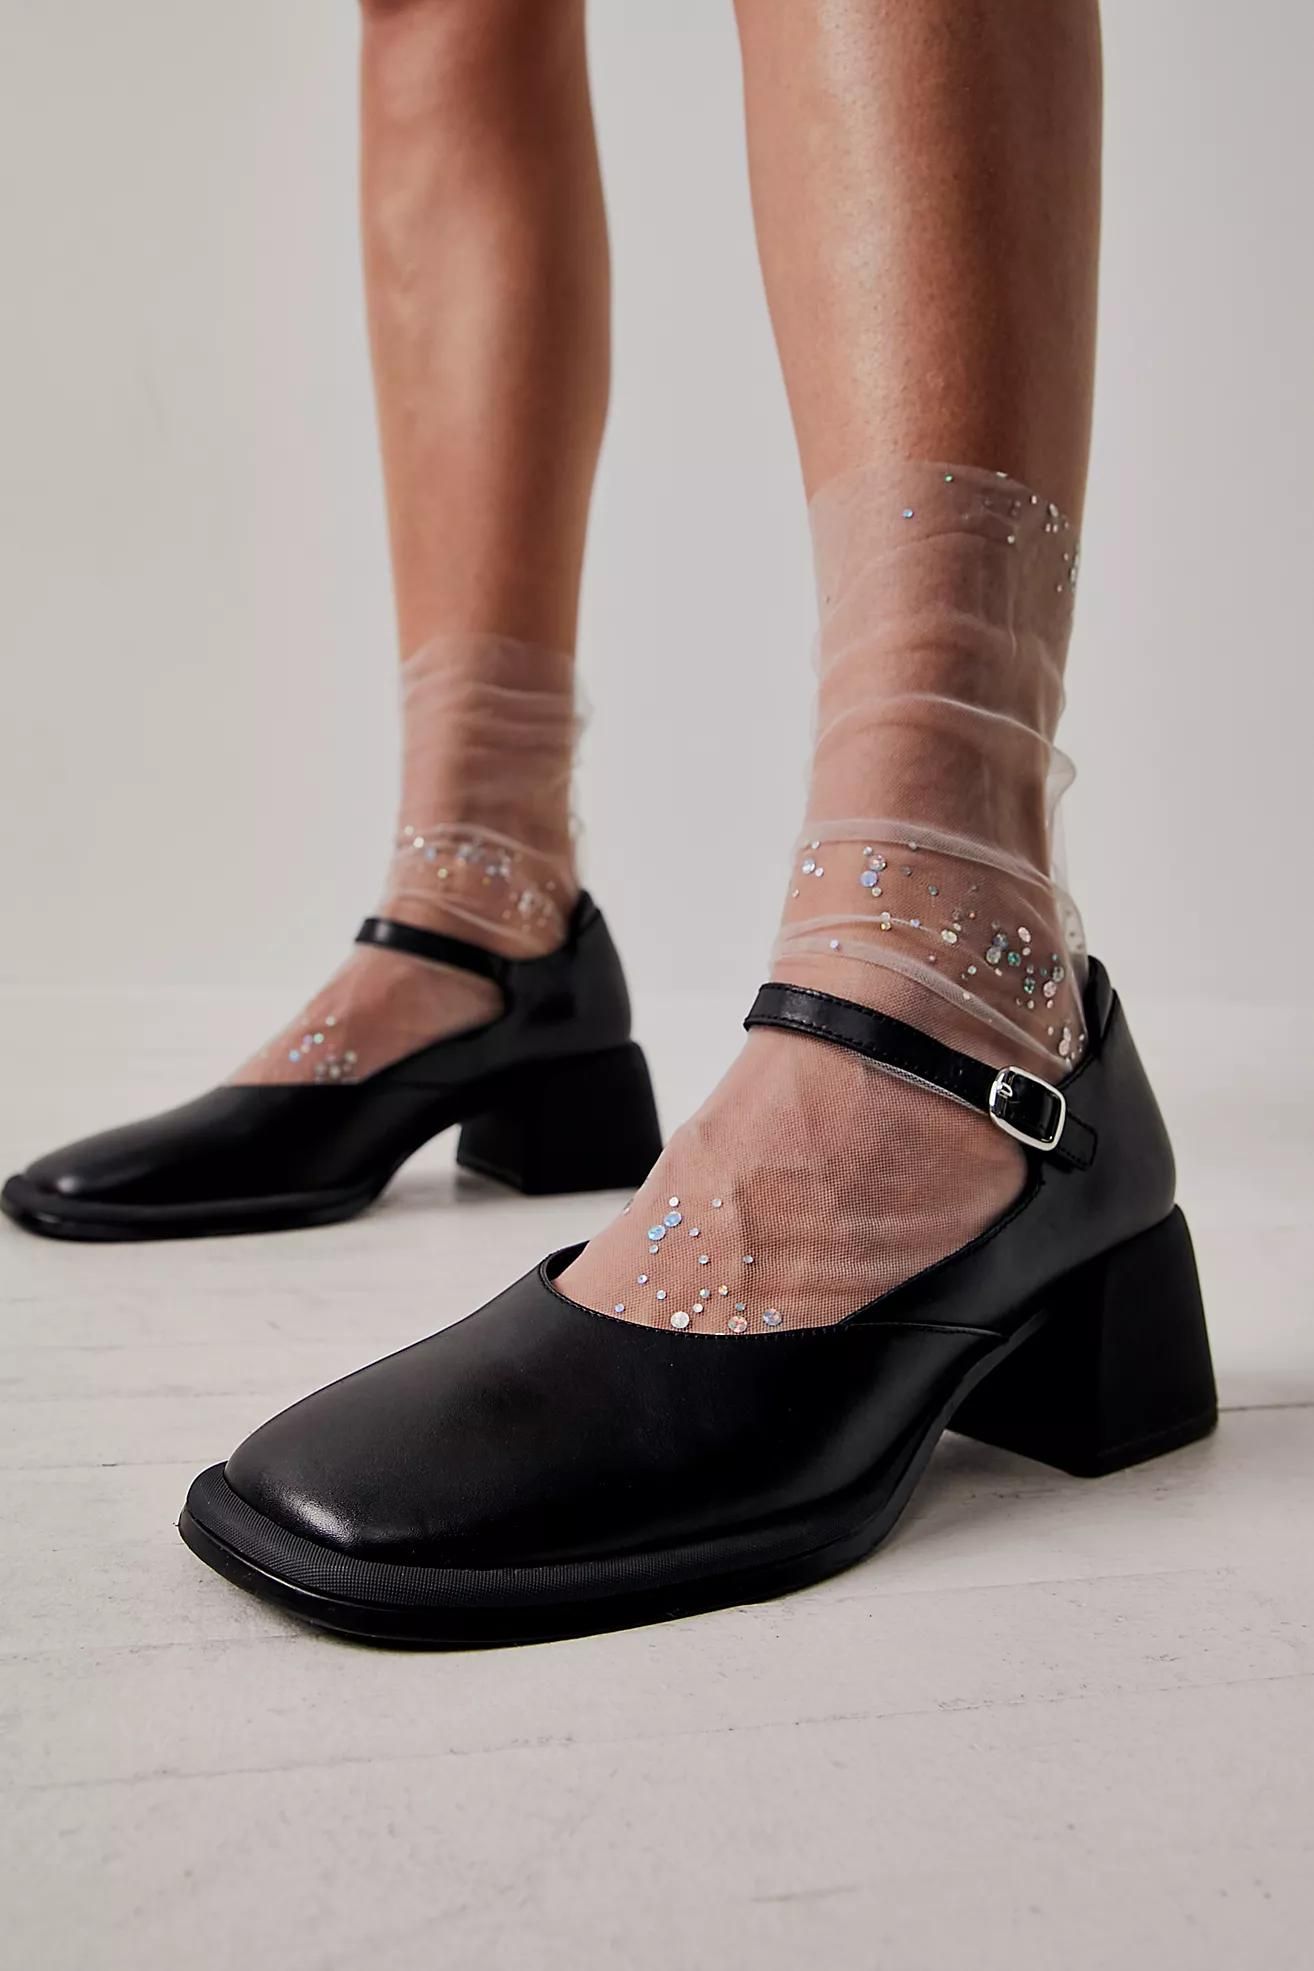 SIGNAL Clear Heels | Designer Tall Stiletto Heels for Women – Steve Madden